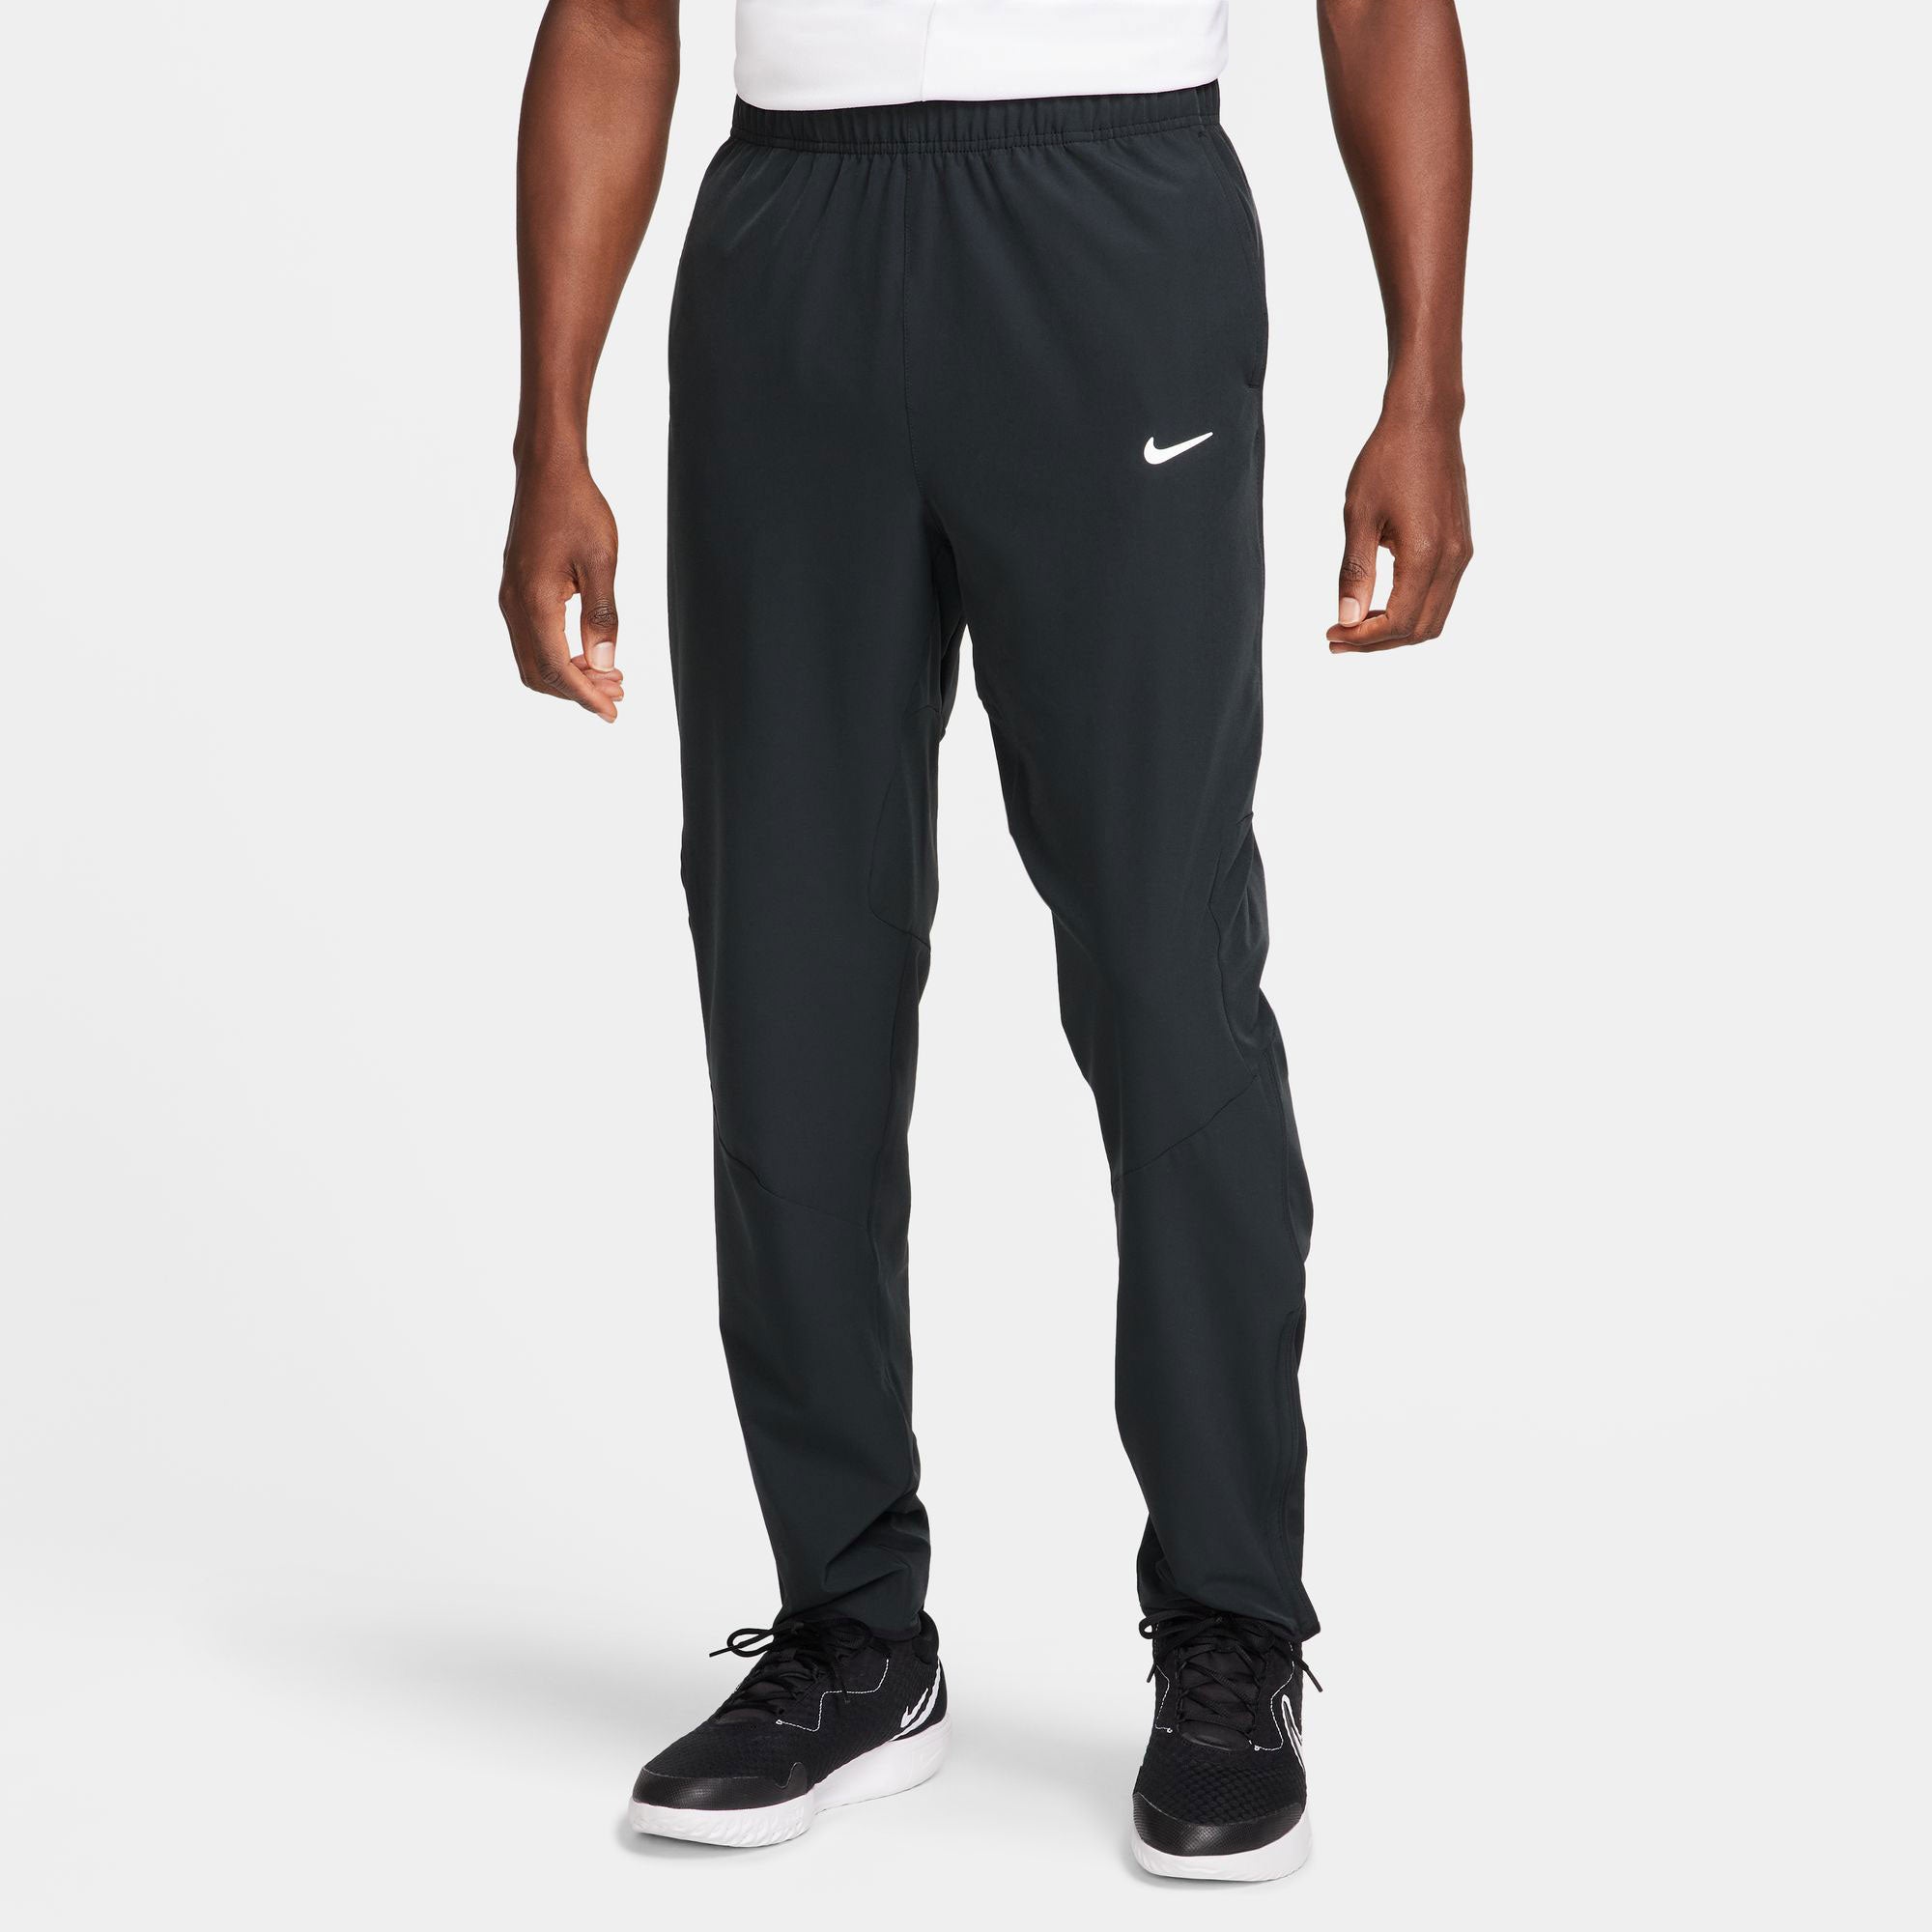 NikeCourt Advantage Men's Dri-FIT Tennis Pants - Black (1)